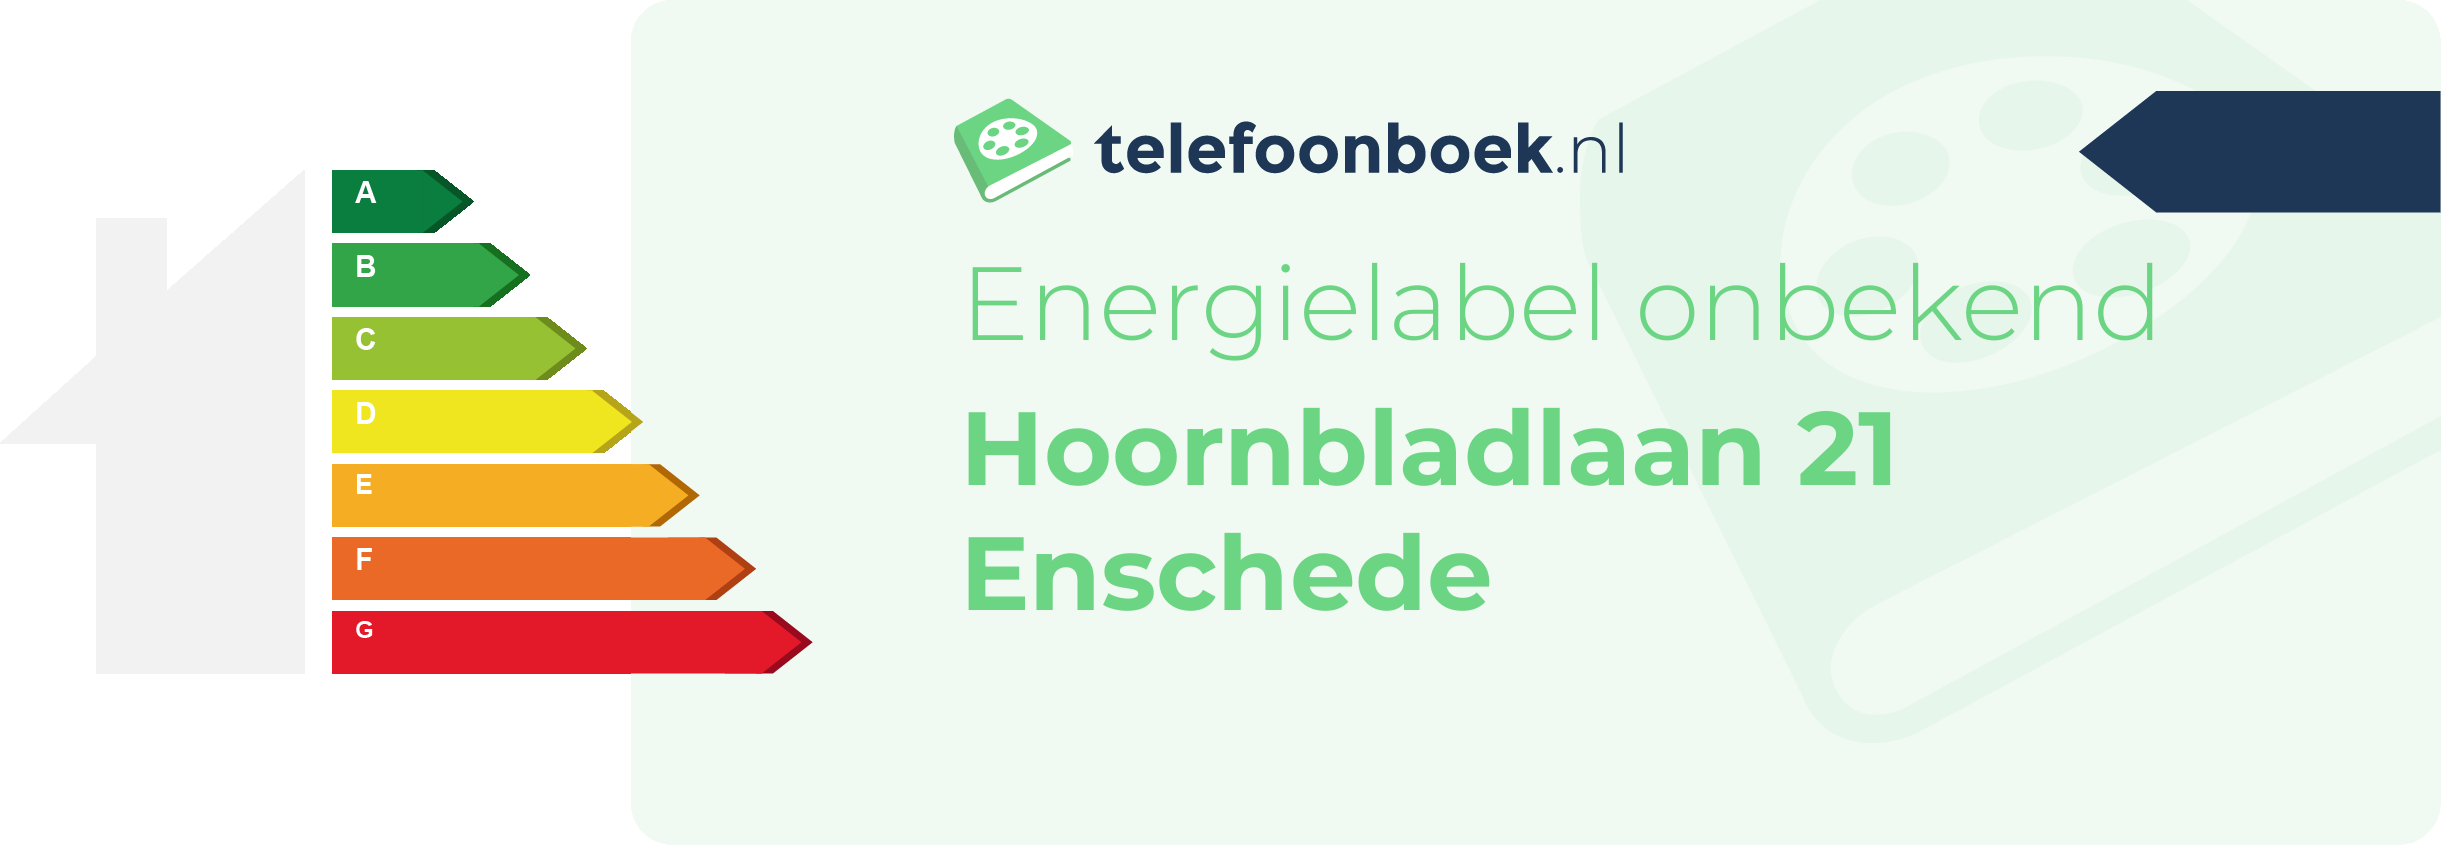 Energielabel Hoornbladlaan 21 Enschede